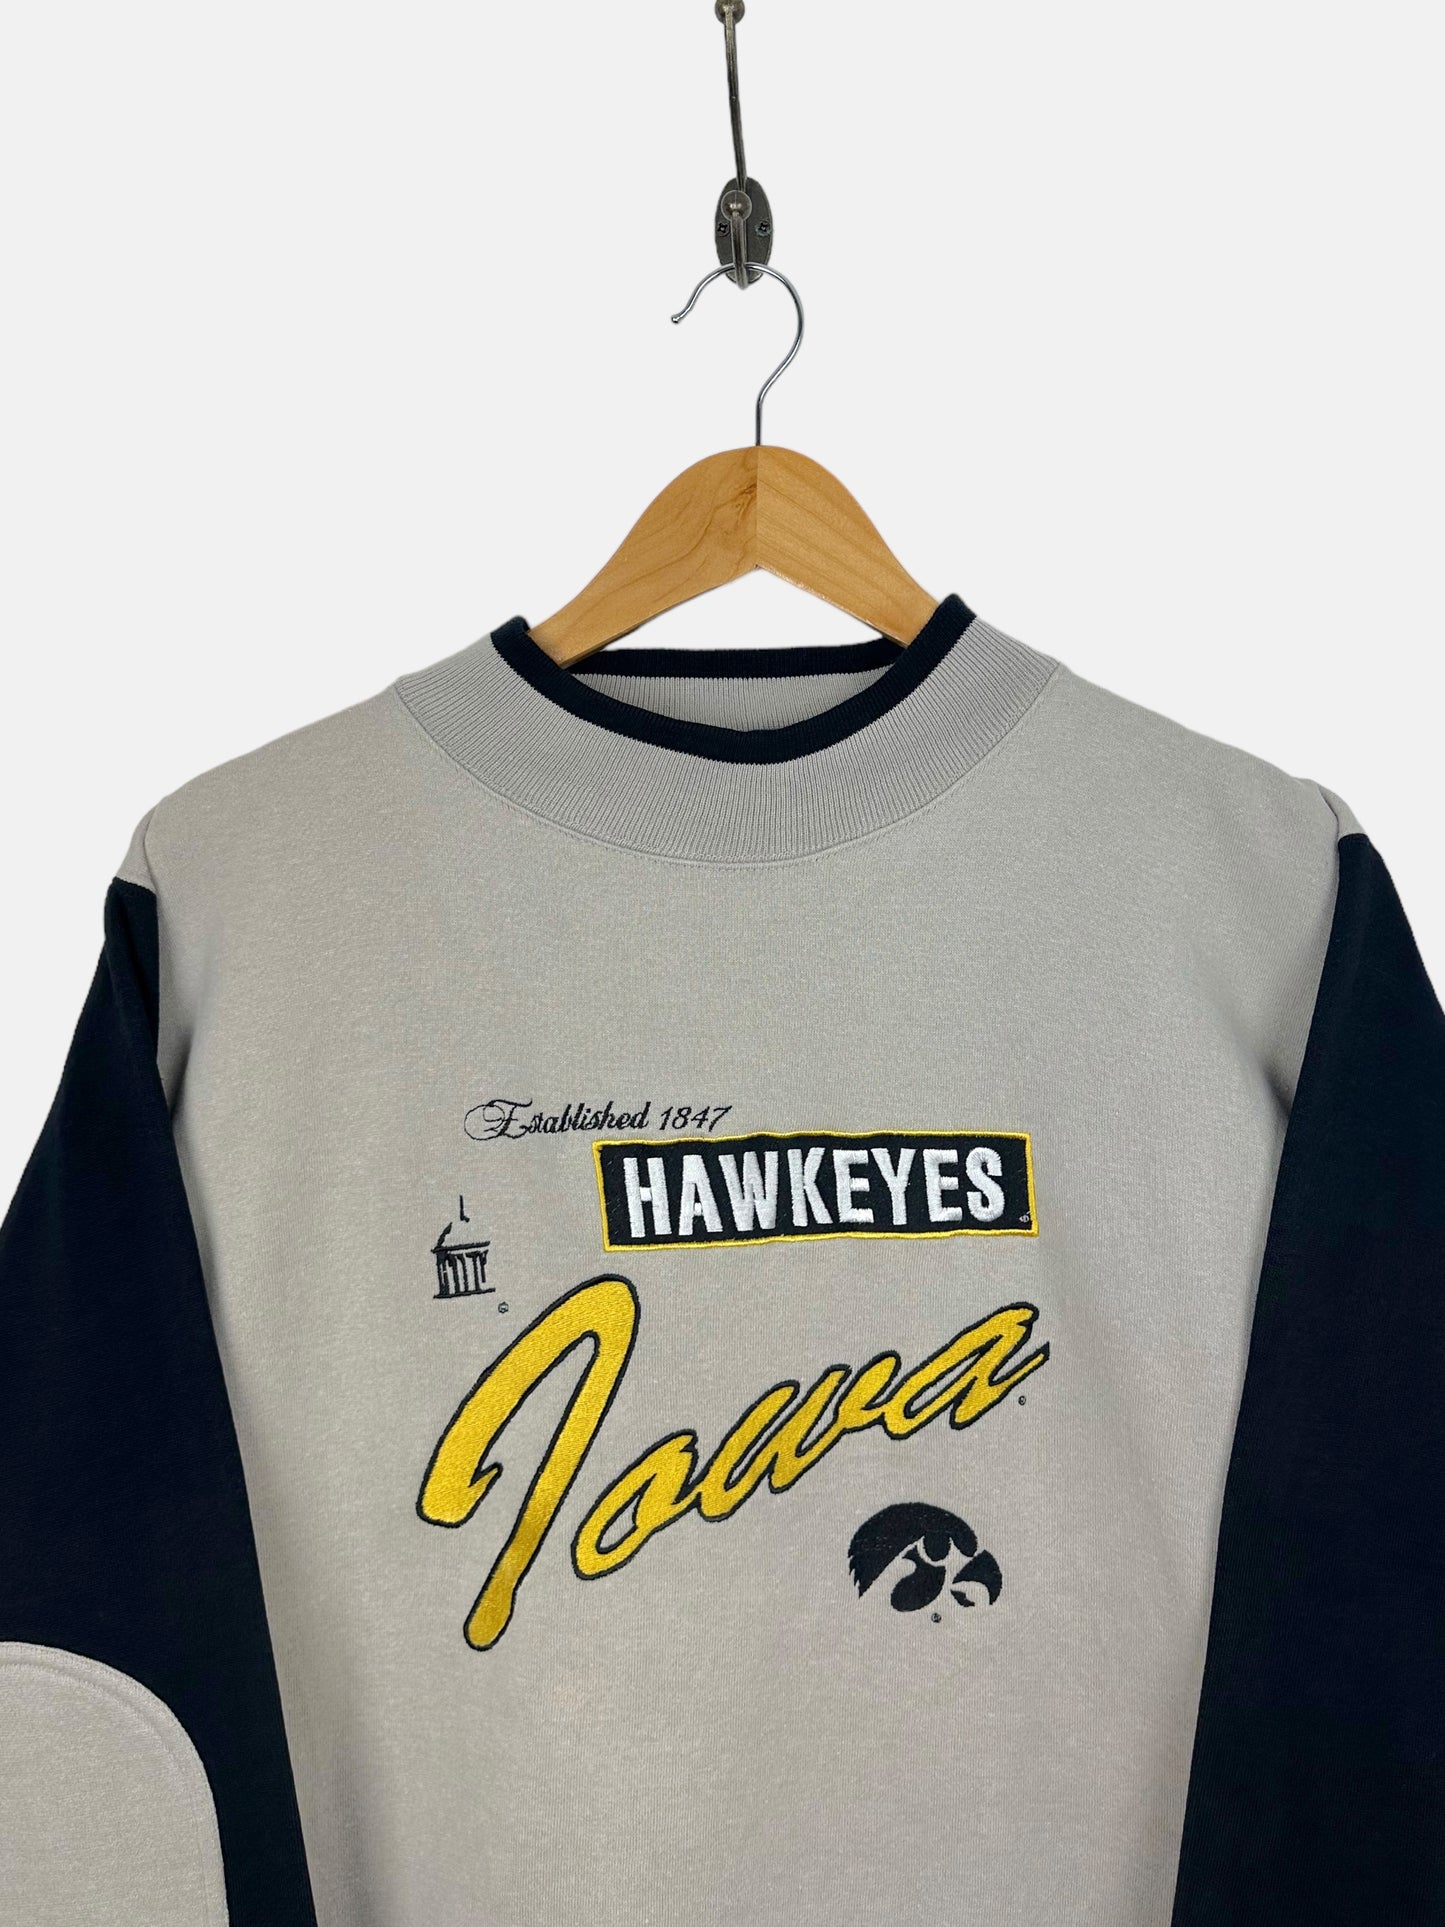 90's Iowa Hawkeyes Embroidered Vintage Sweatshirt Size M